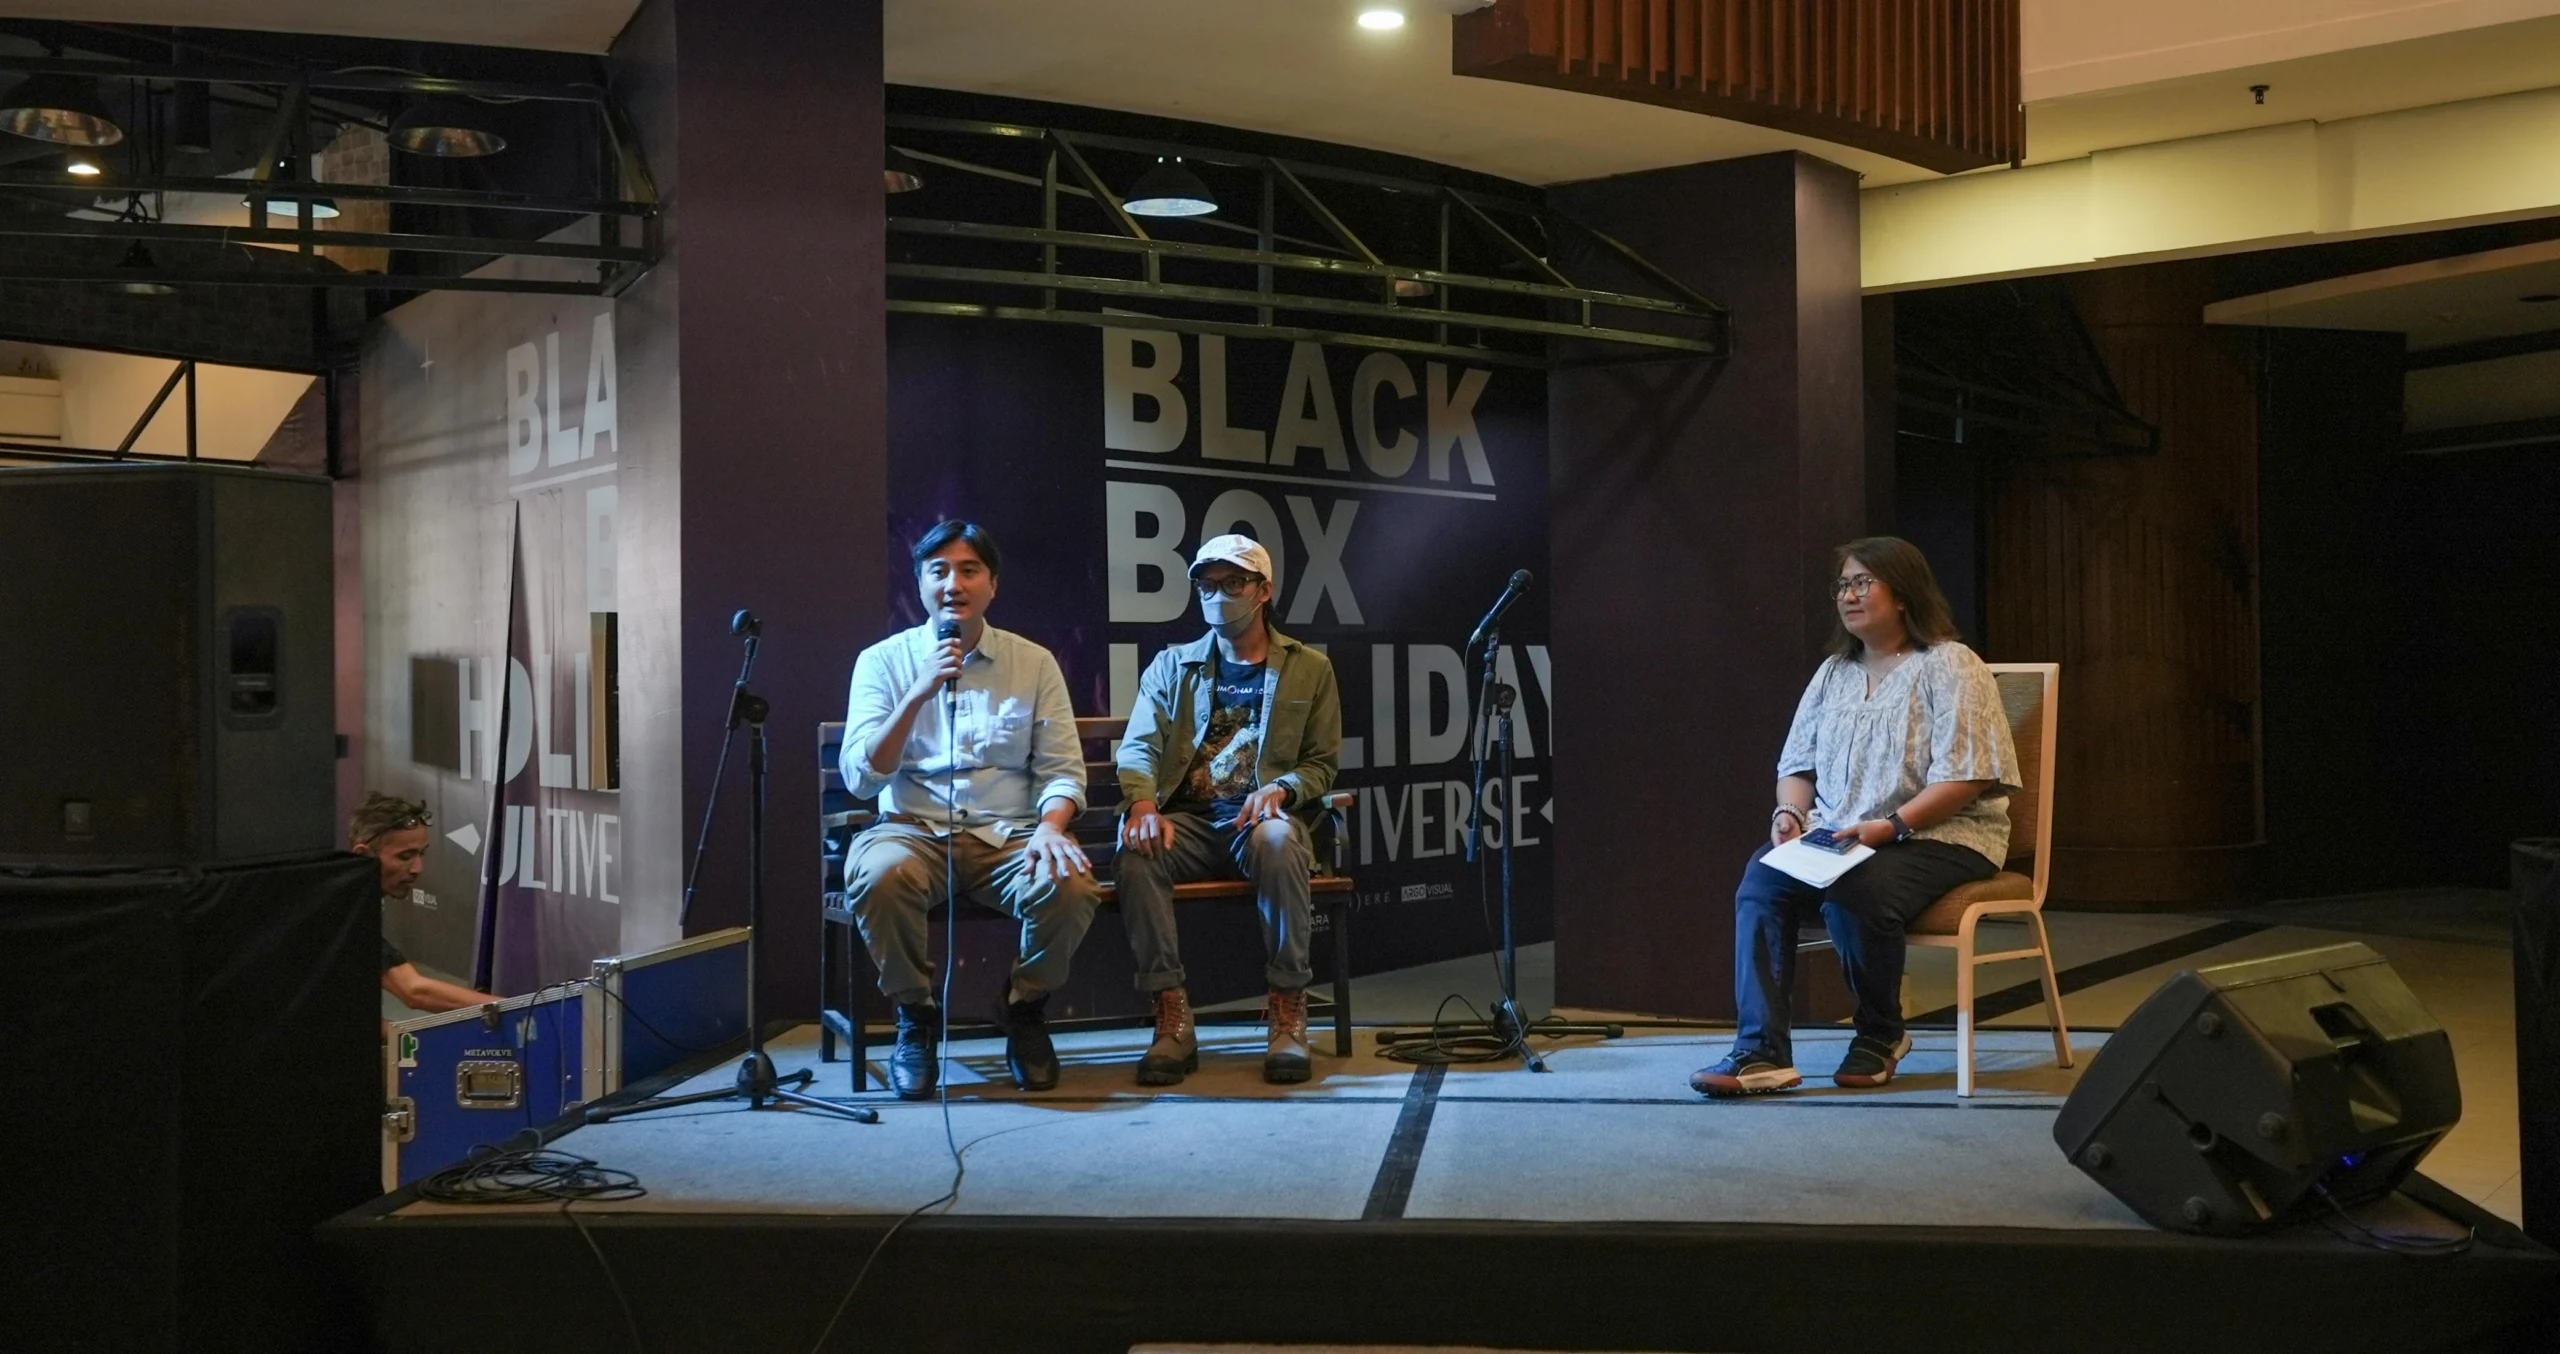 Black Box Holiday Immersive, Menghadirkan Pengalaman Sensori yang Mengagumkan di Braga City Walk Bandung